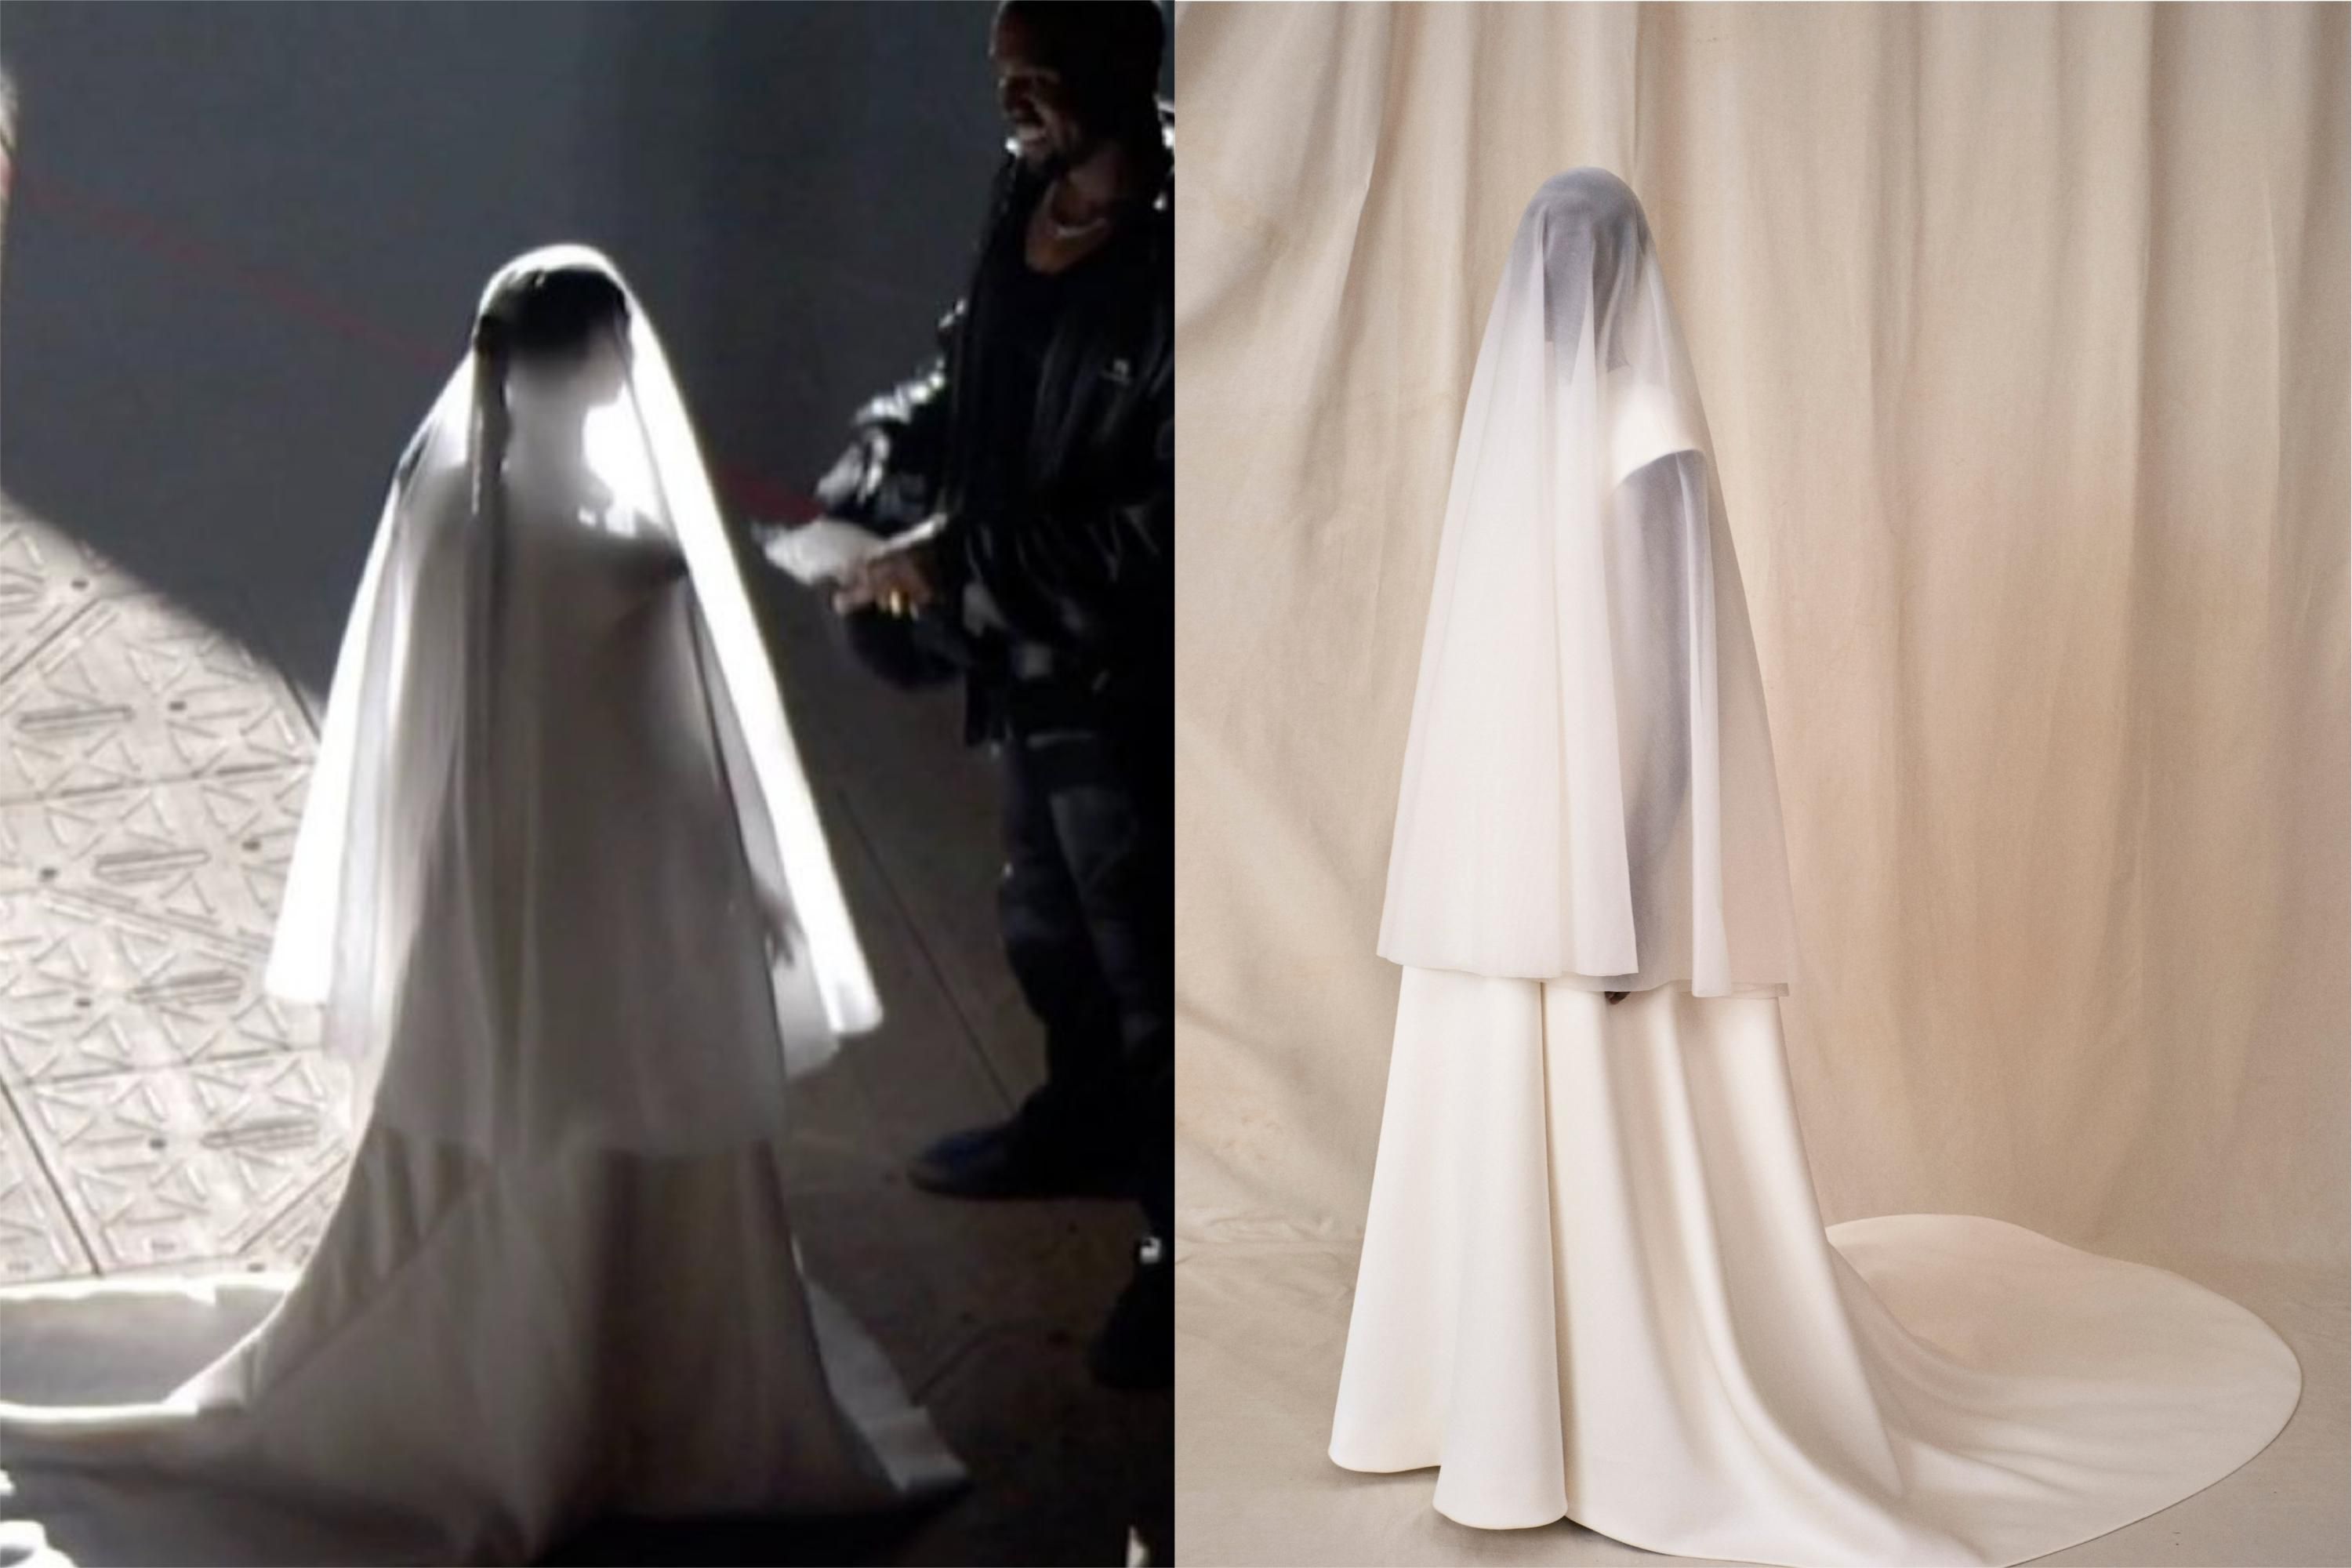 Kim Kardashian swaps elegant wedding gown for racy fishnet stockings,  bridal-style underwear and a huge veil - Mirror Online